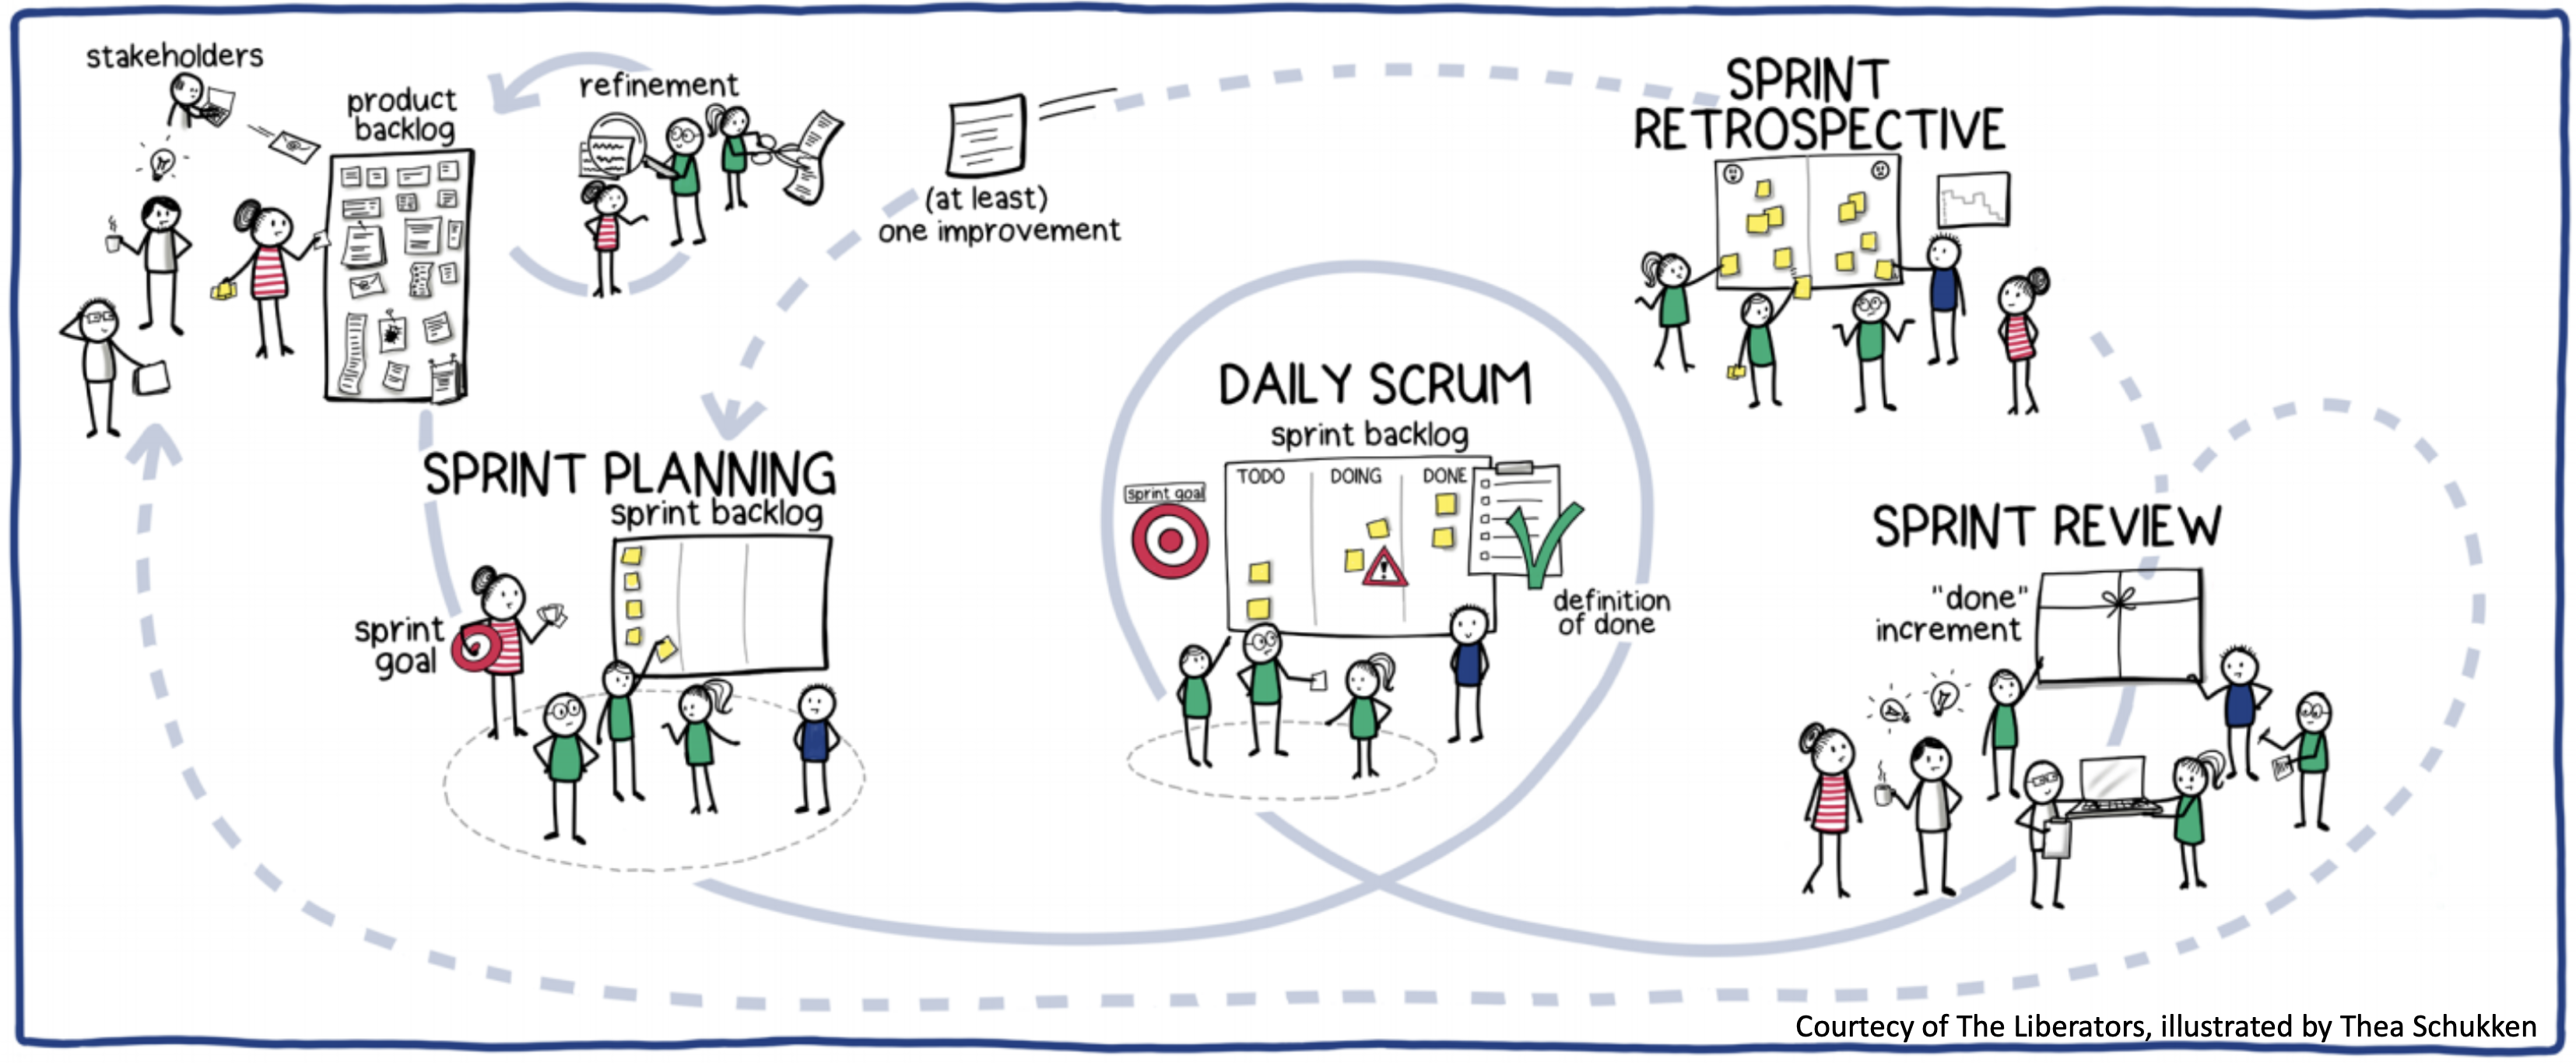 The Scrum Framework illustrated